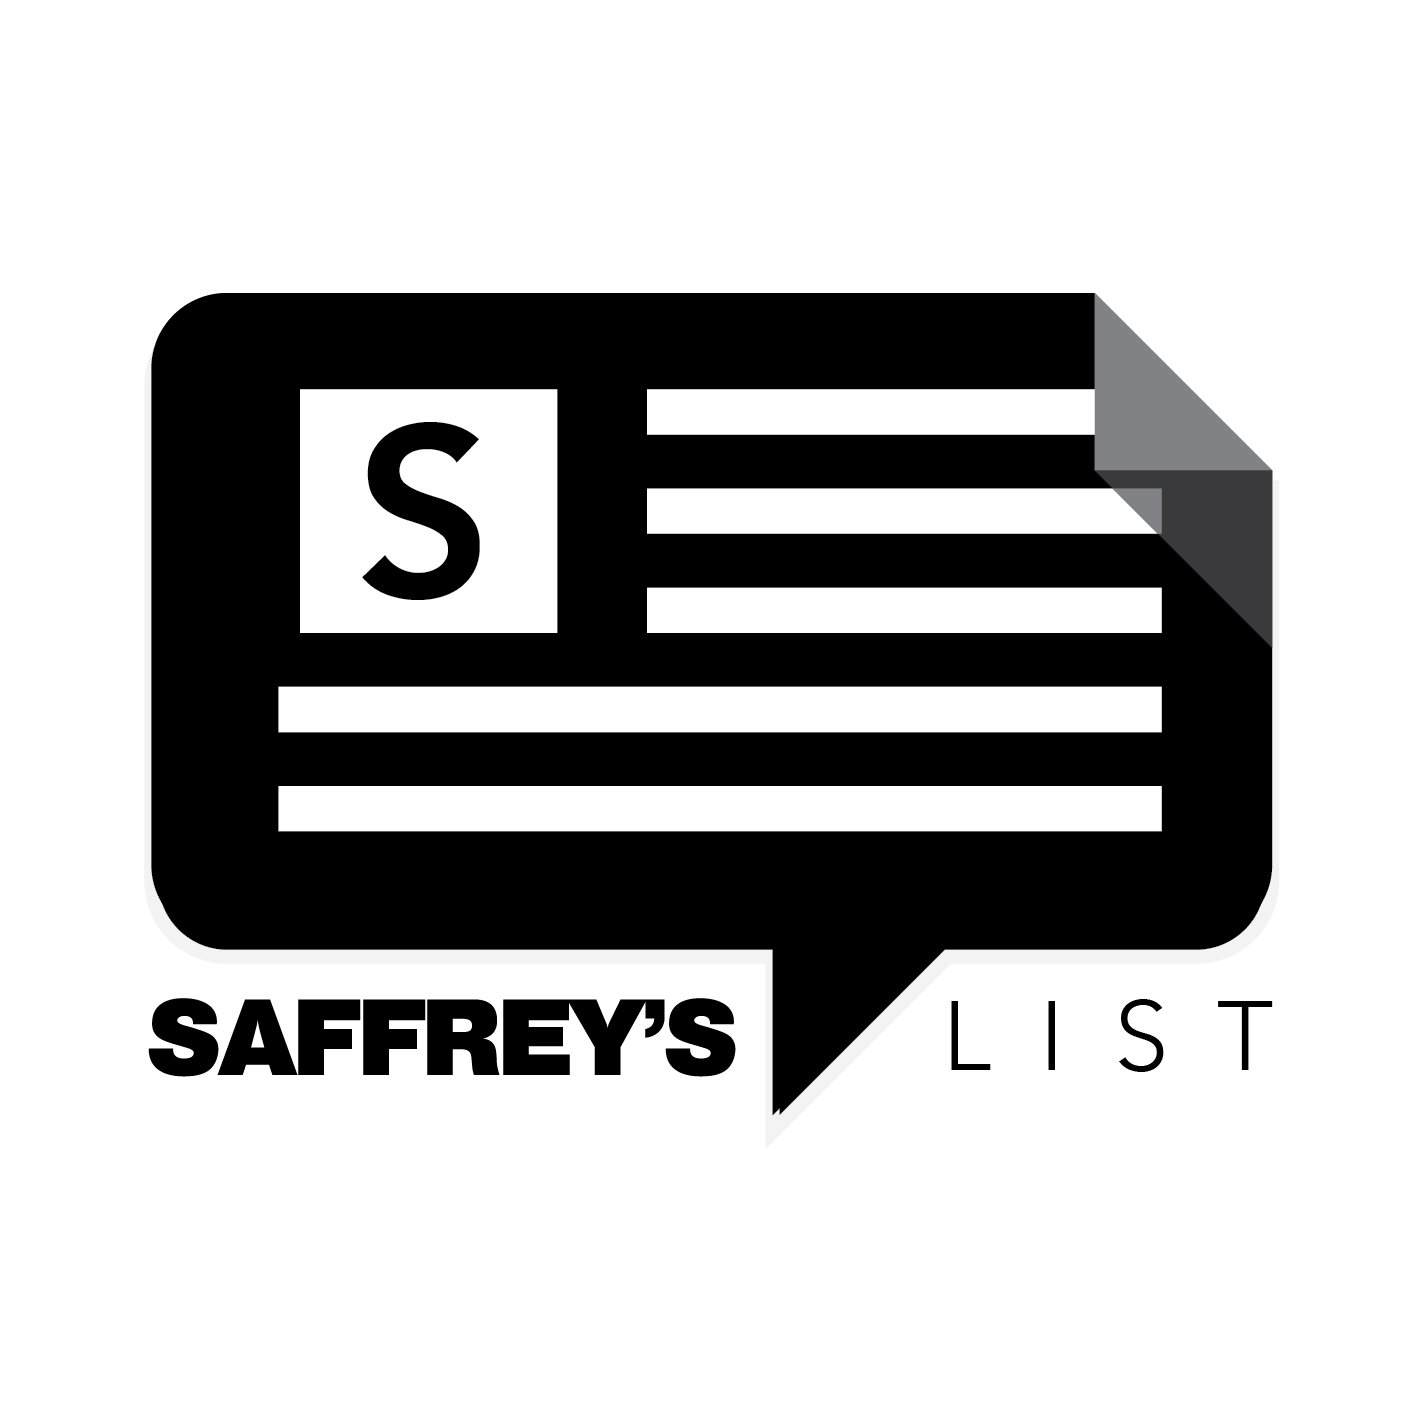 Saffreys list